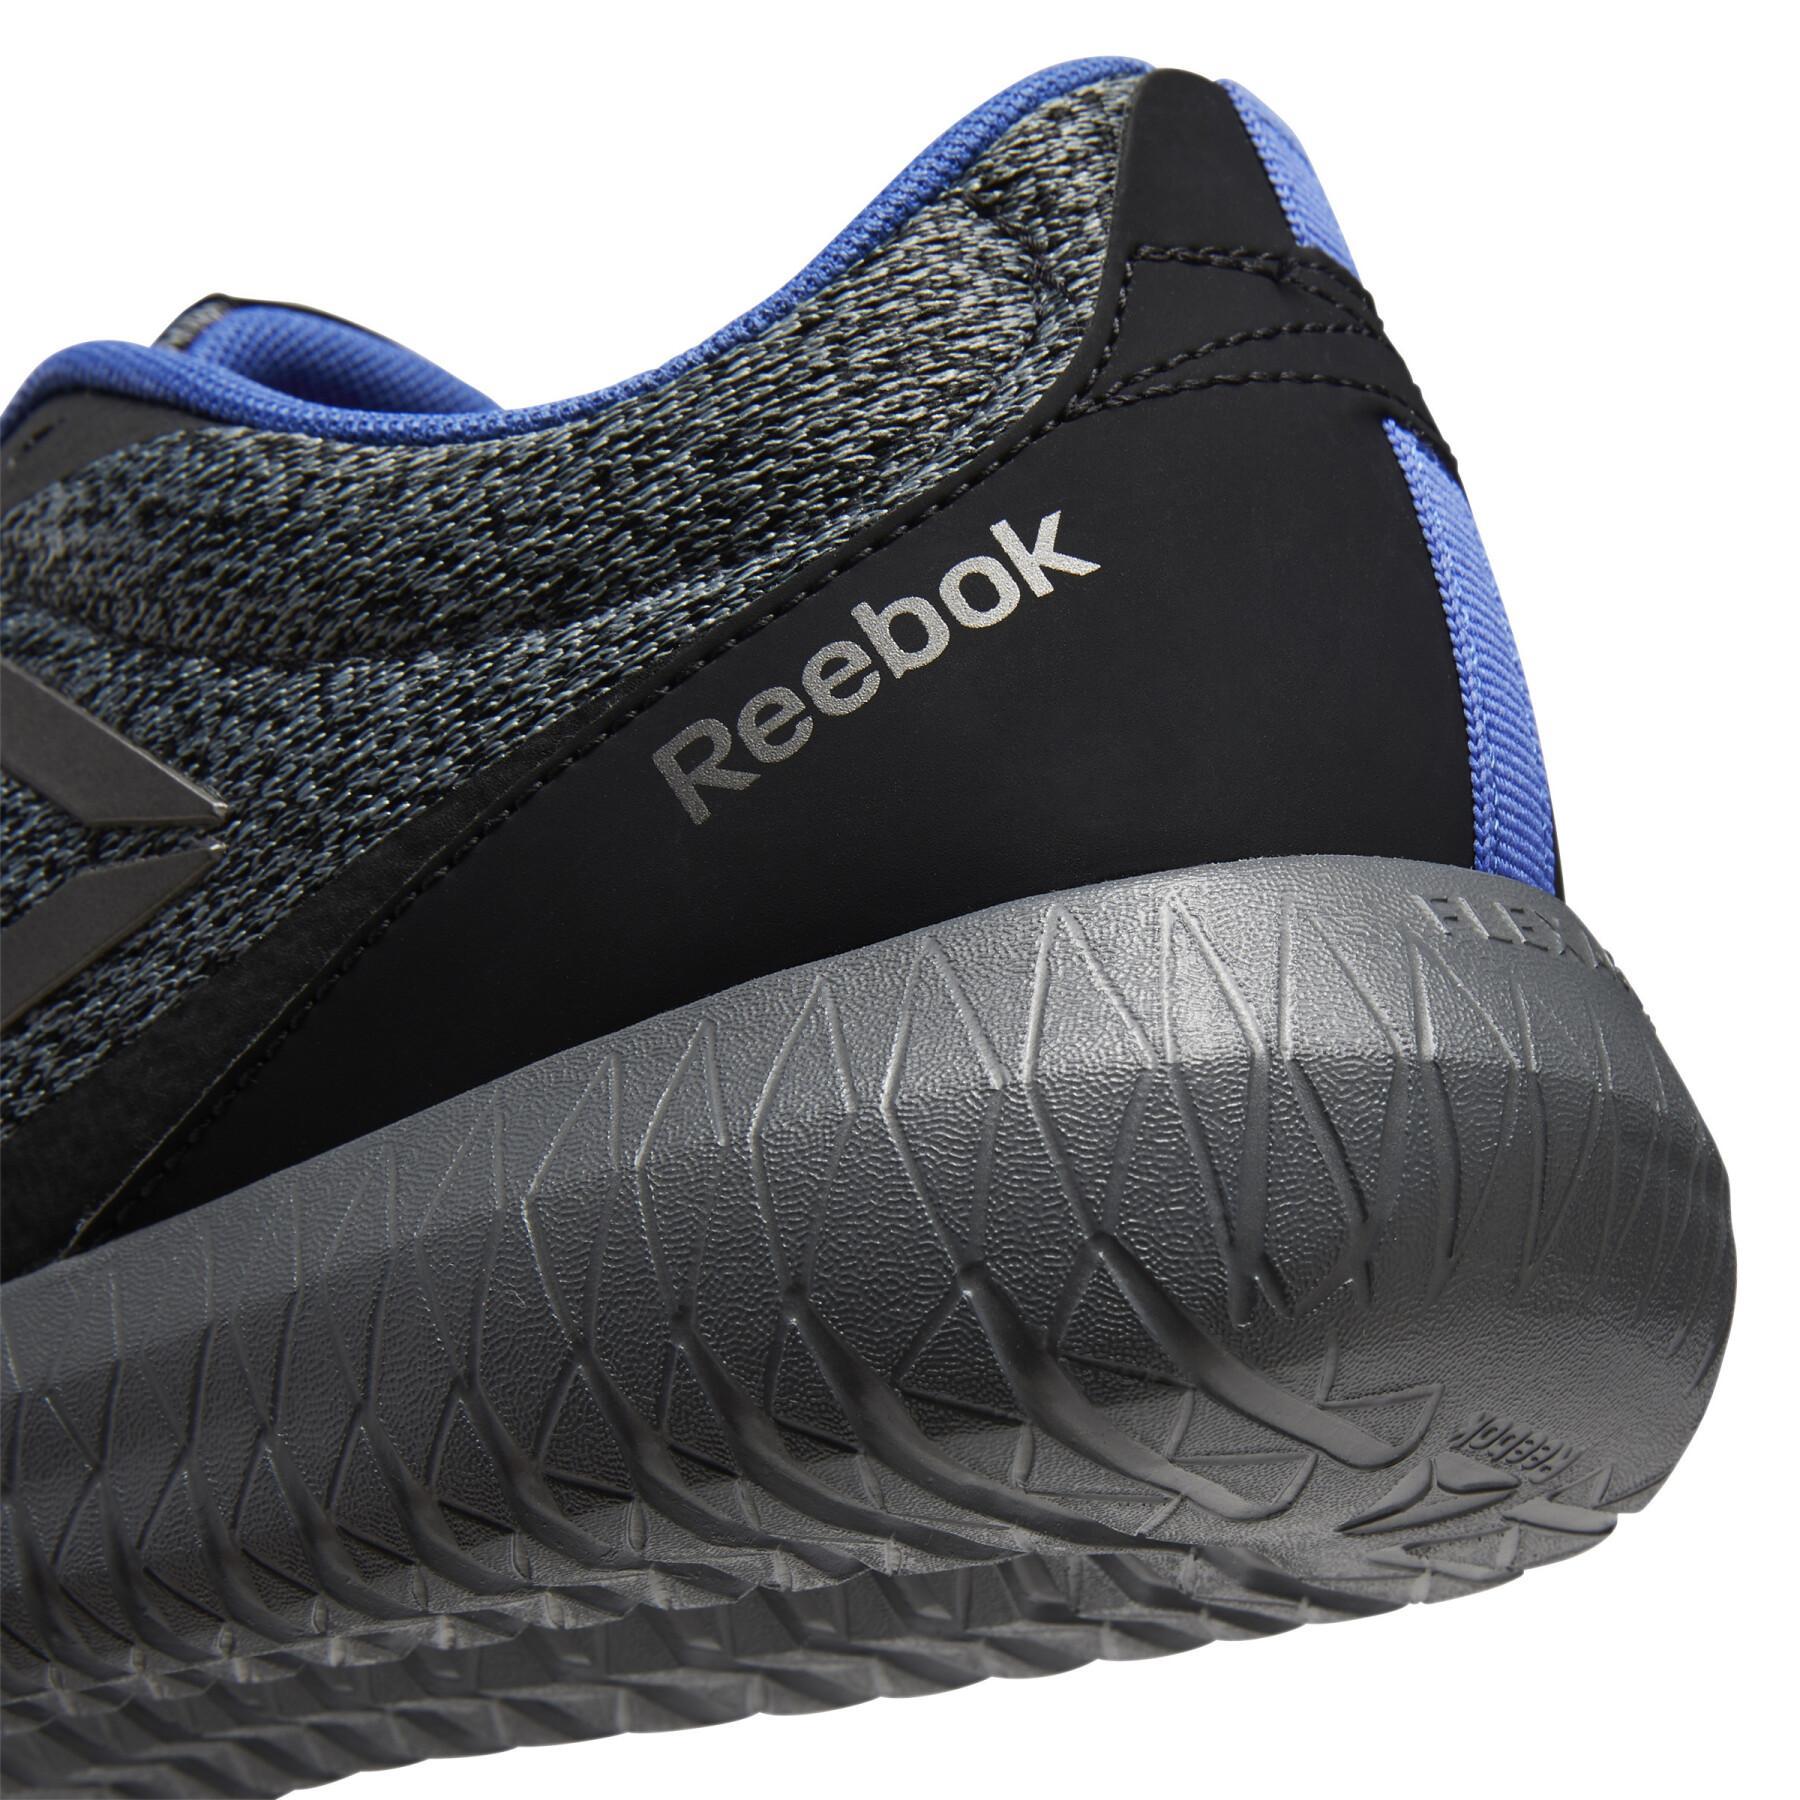 Sapatos Reebok Flexagon Force